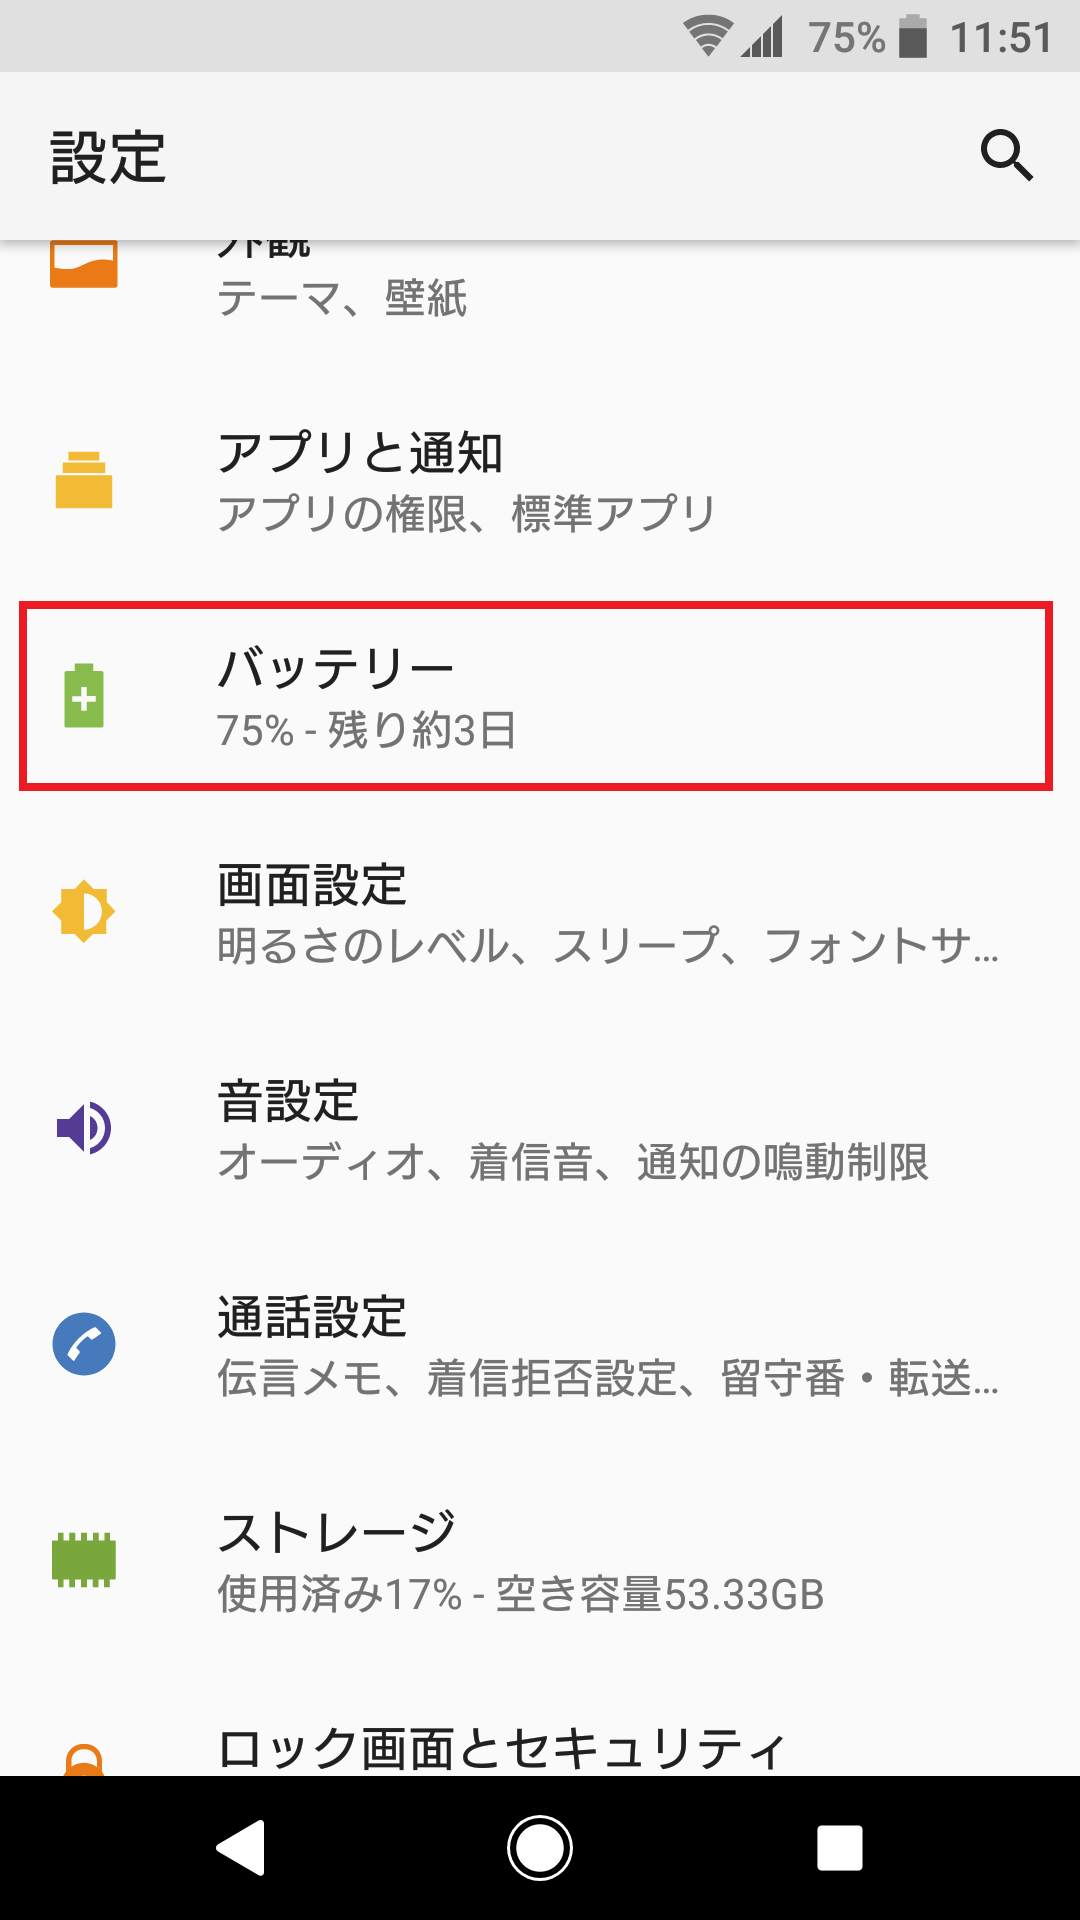 Xperiaの便利テク Staminaモード を使いこなしてバッテリー消費を防ごう Xperia Tips Engadget 日本版